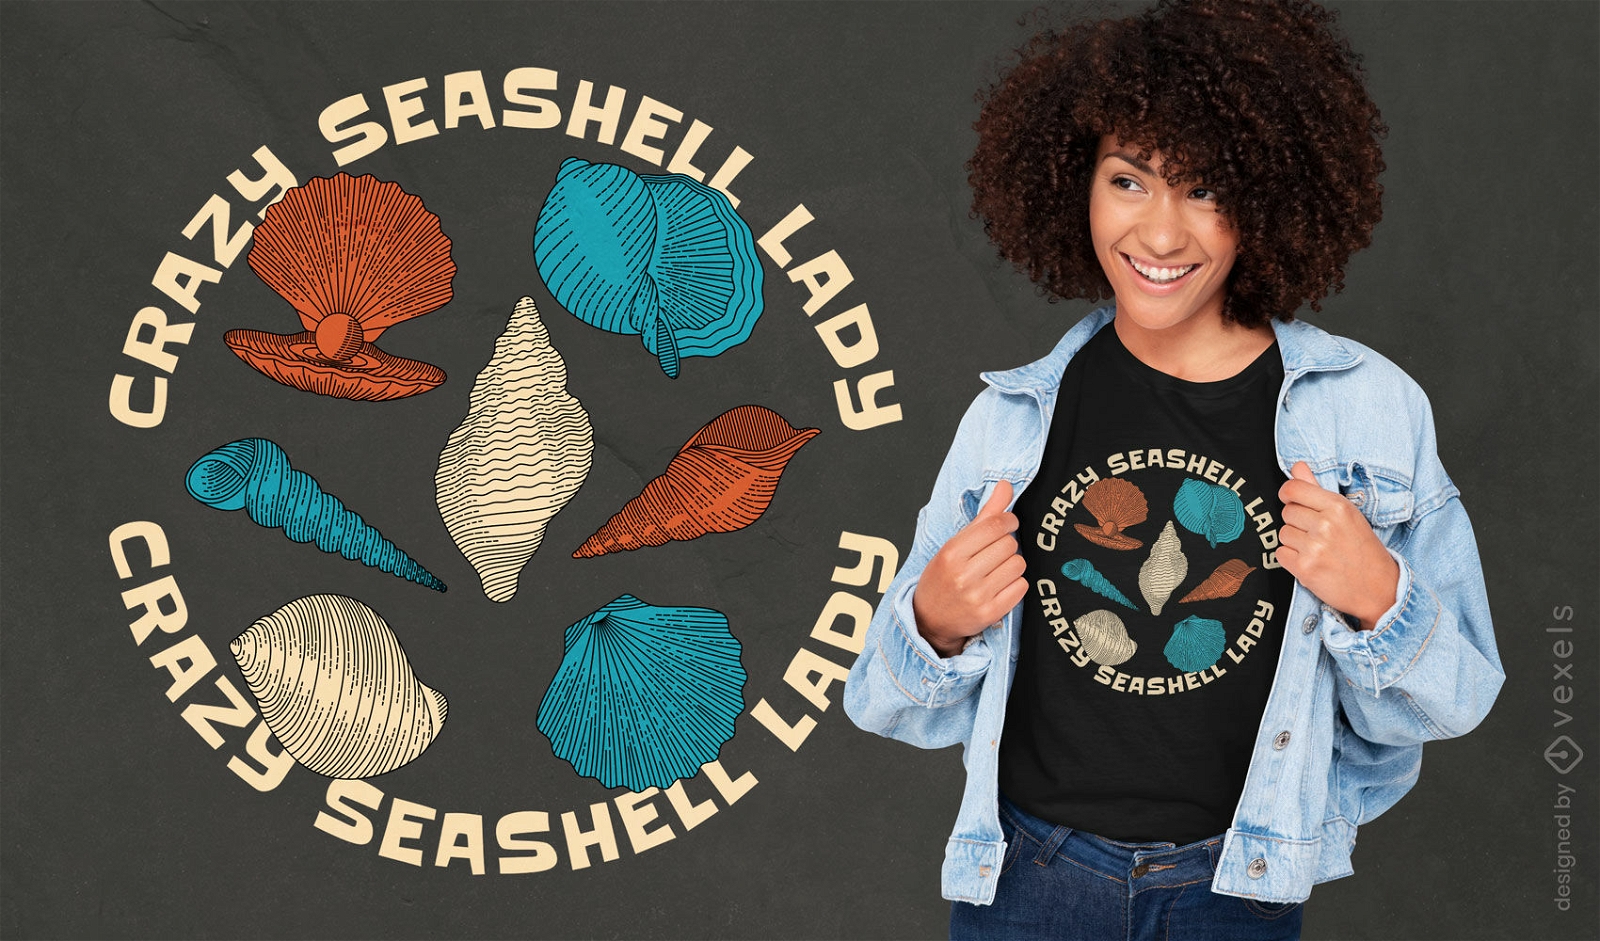 Crazy shell lady t-shirt design